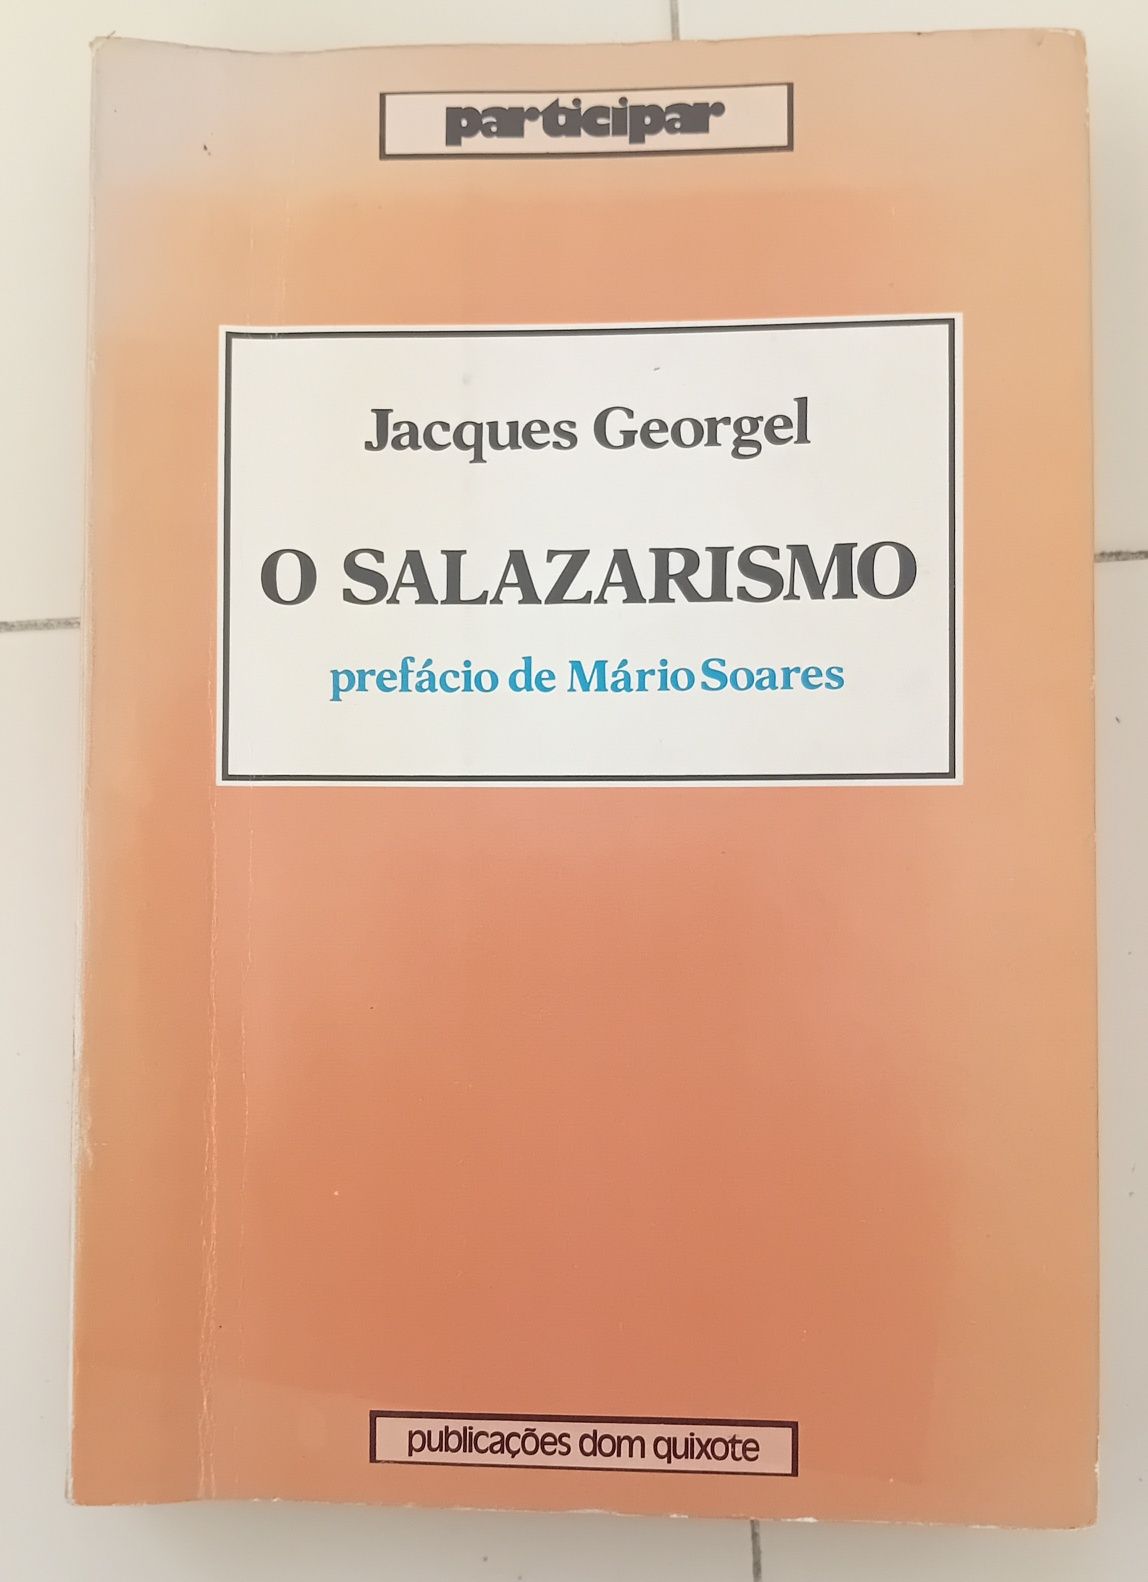 Jacques Georgel "O Salazarismo"